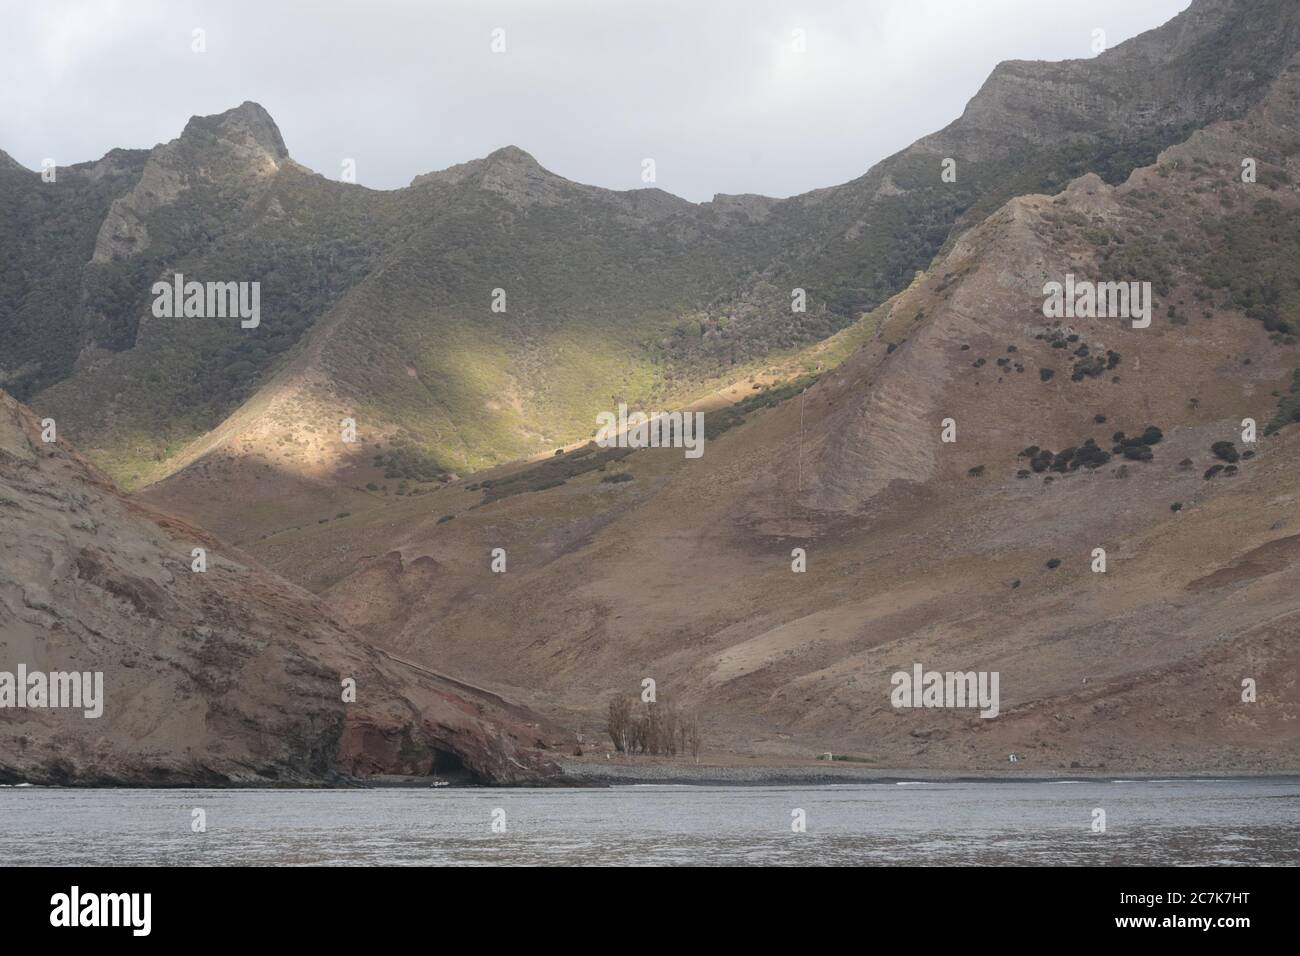 Selkirk’s Cave near San Juan Bautista, Robinson Crusoe Island, Juan Fernandez Group, Chile March 2020 Stock Photo